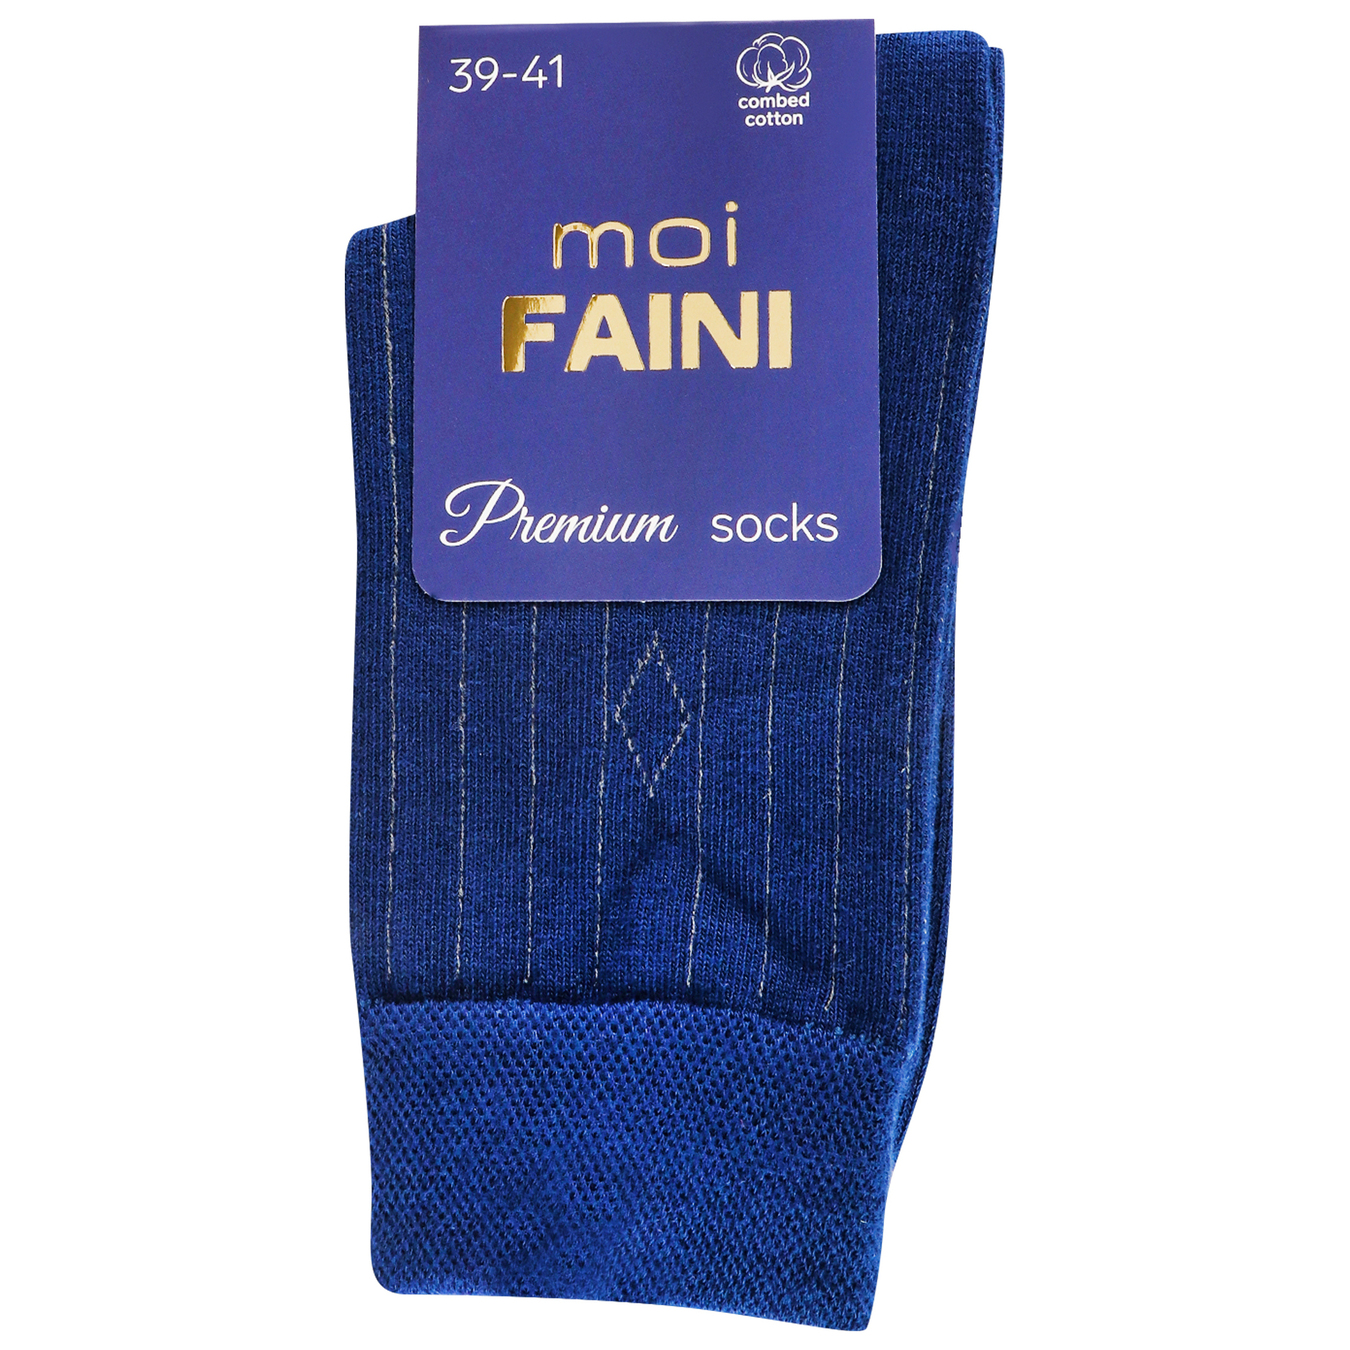 Socks Moi Faini men's cut cotton dark blue 39-41 years.